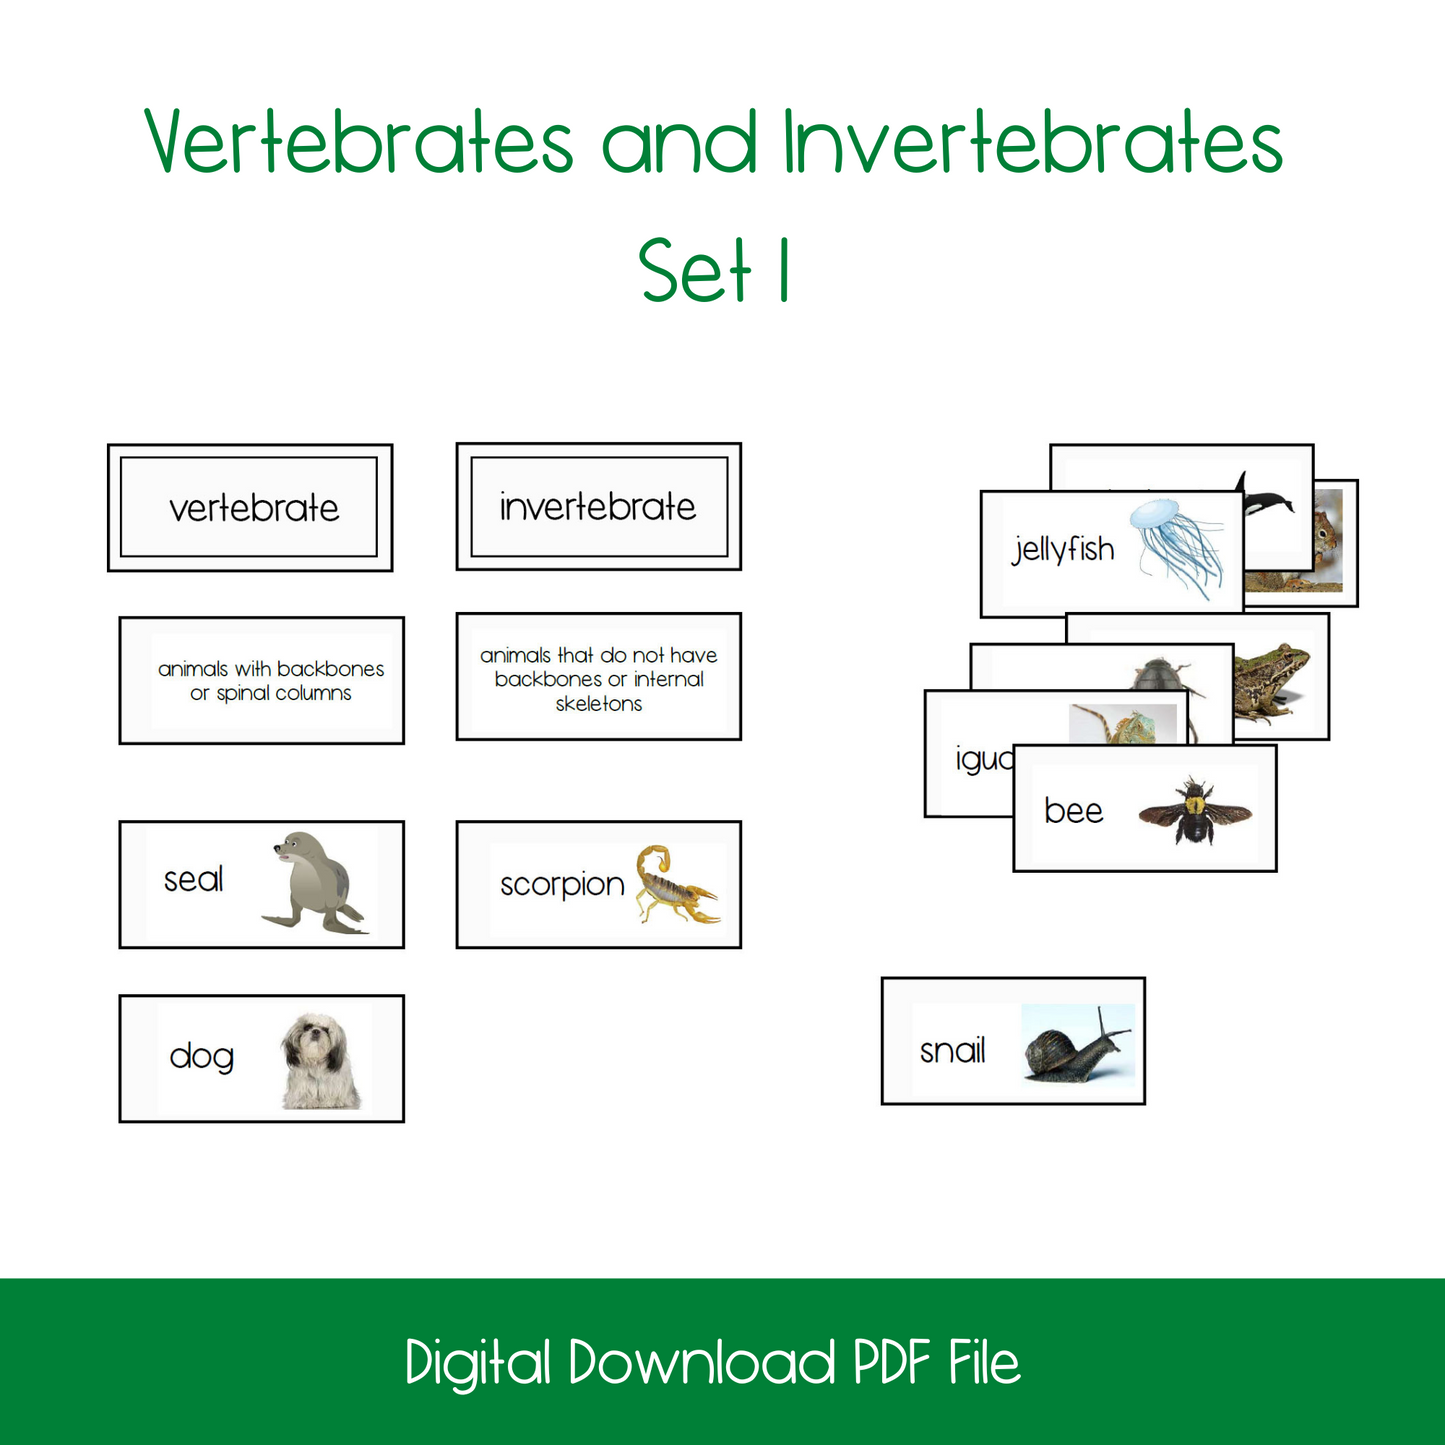 Vertebrate and Invertebrate Classification/Sorting Card Set (2 Sets)